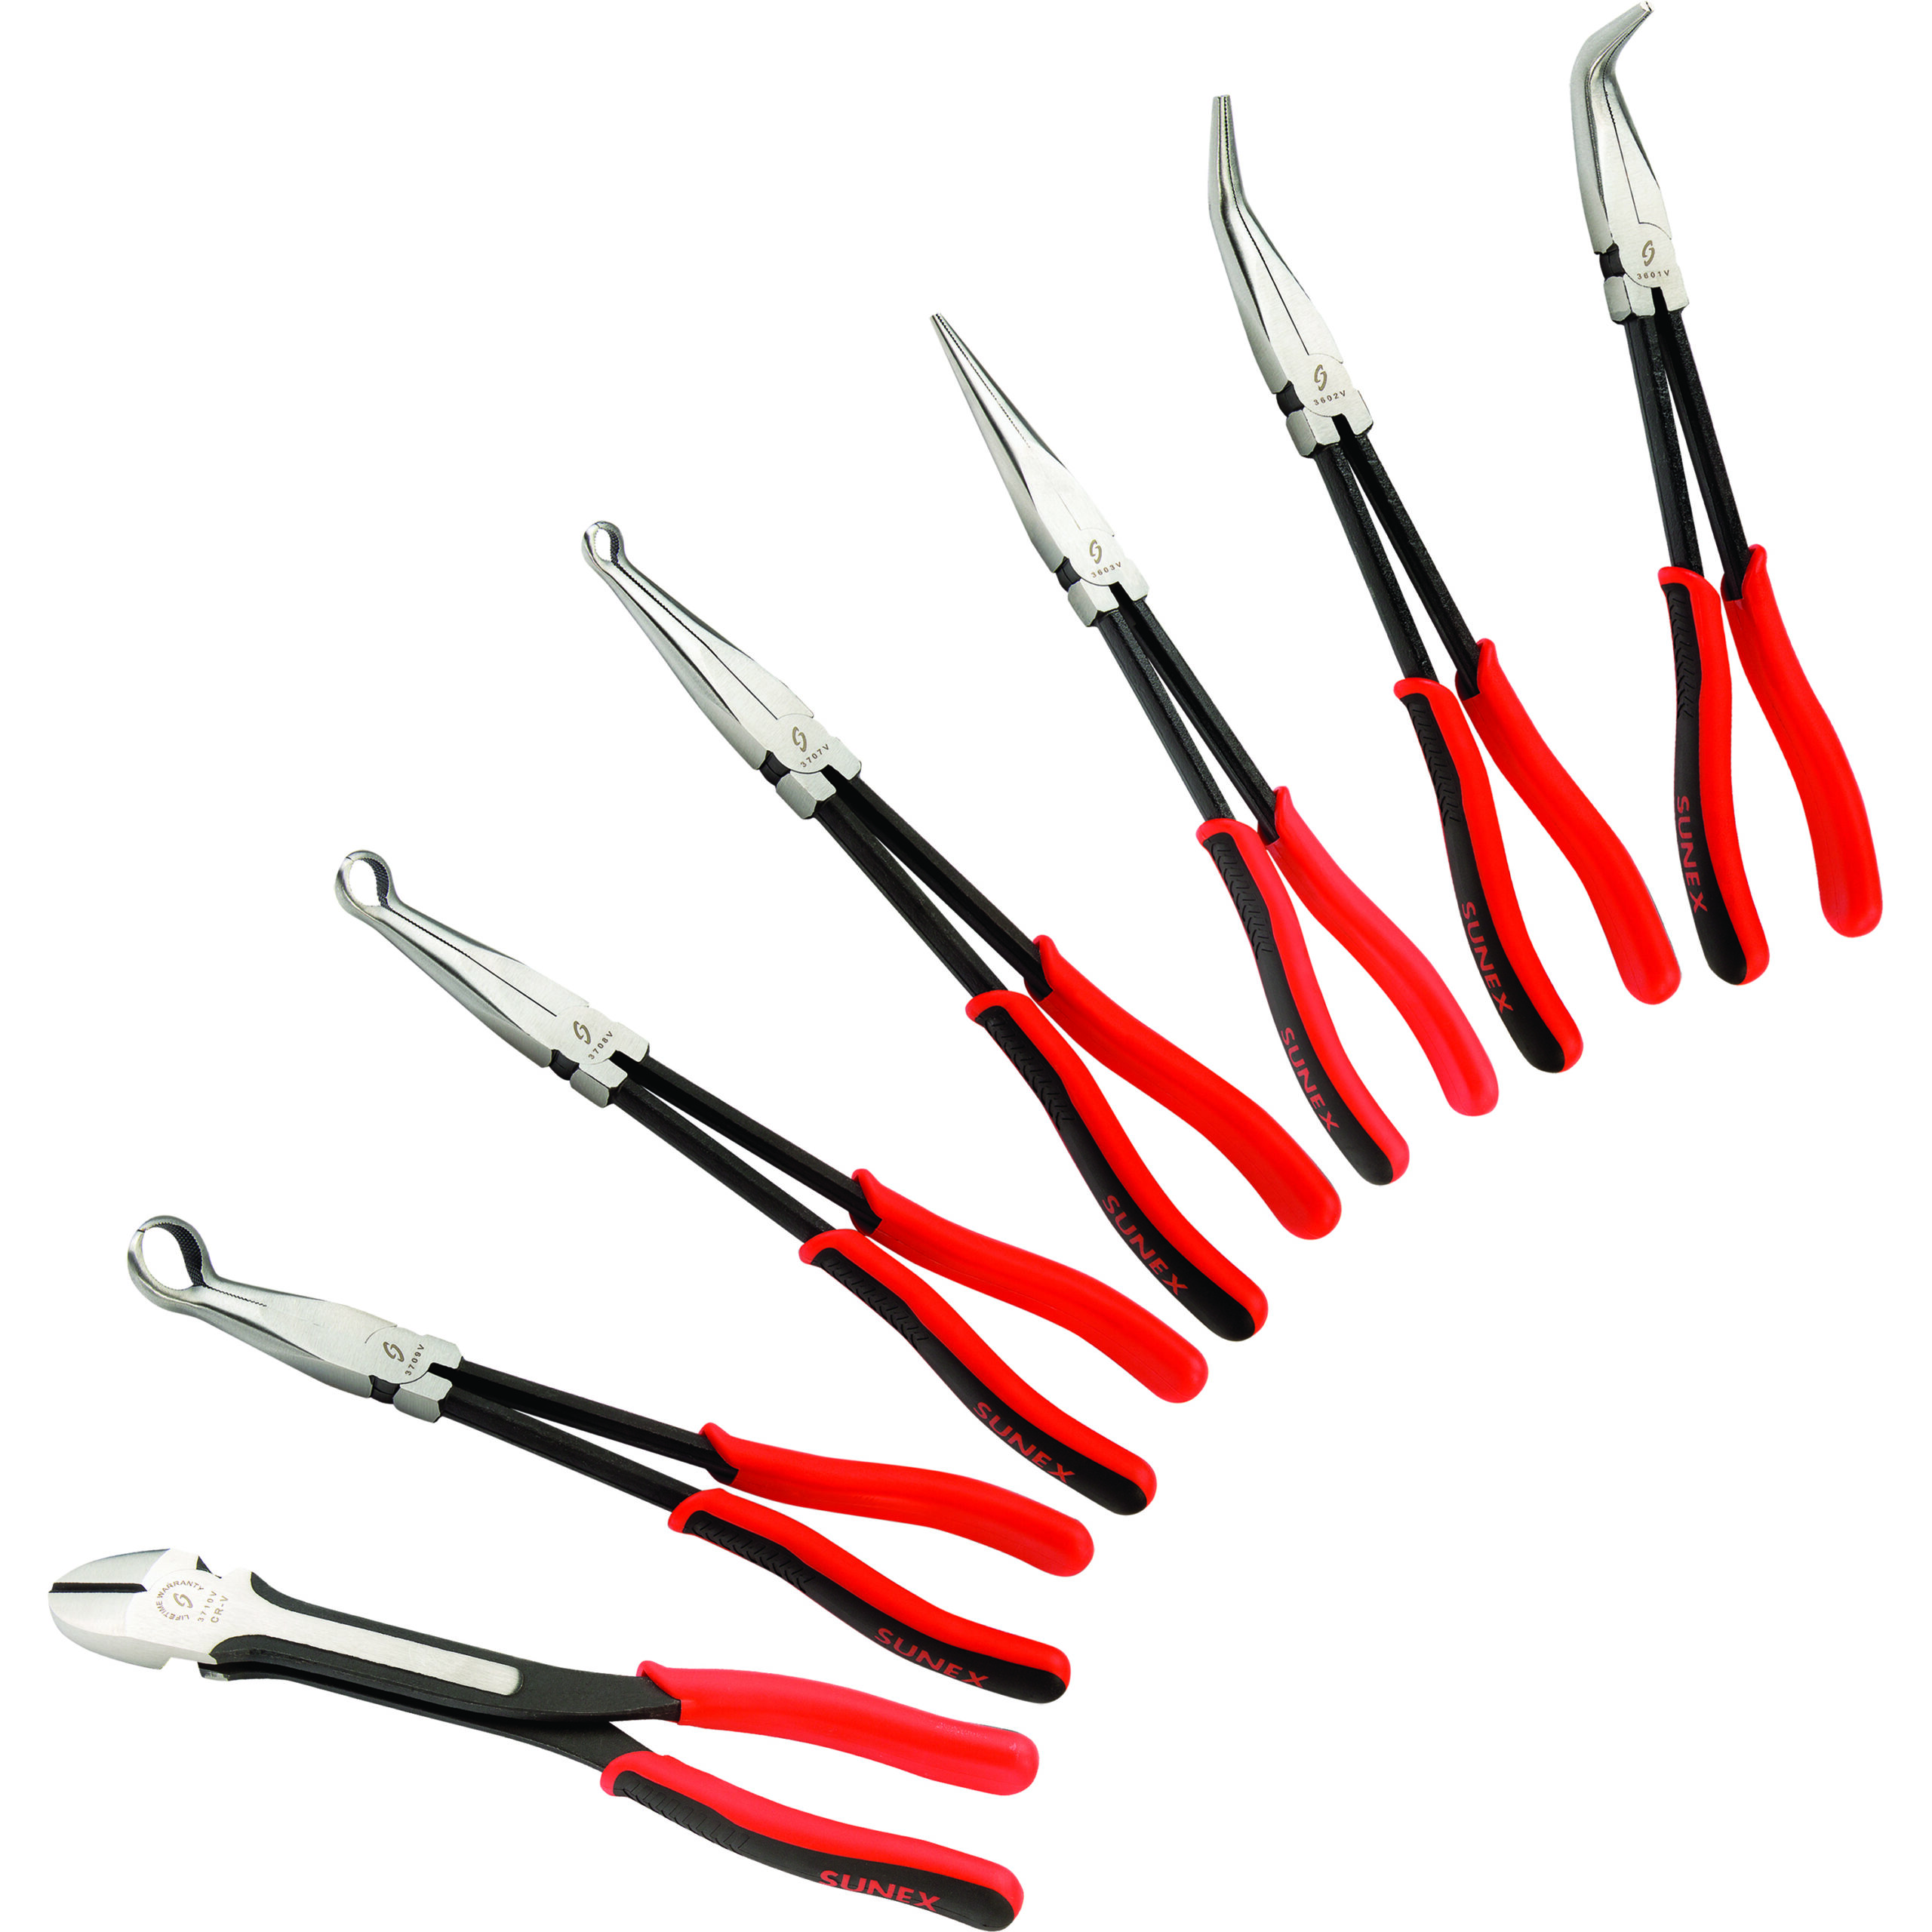 Hook and Pick Tool Set Scraper Large Full & Small Mini Size Non-slip Handle